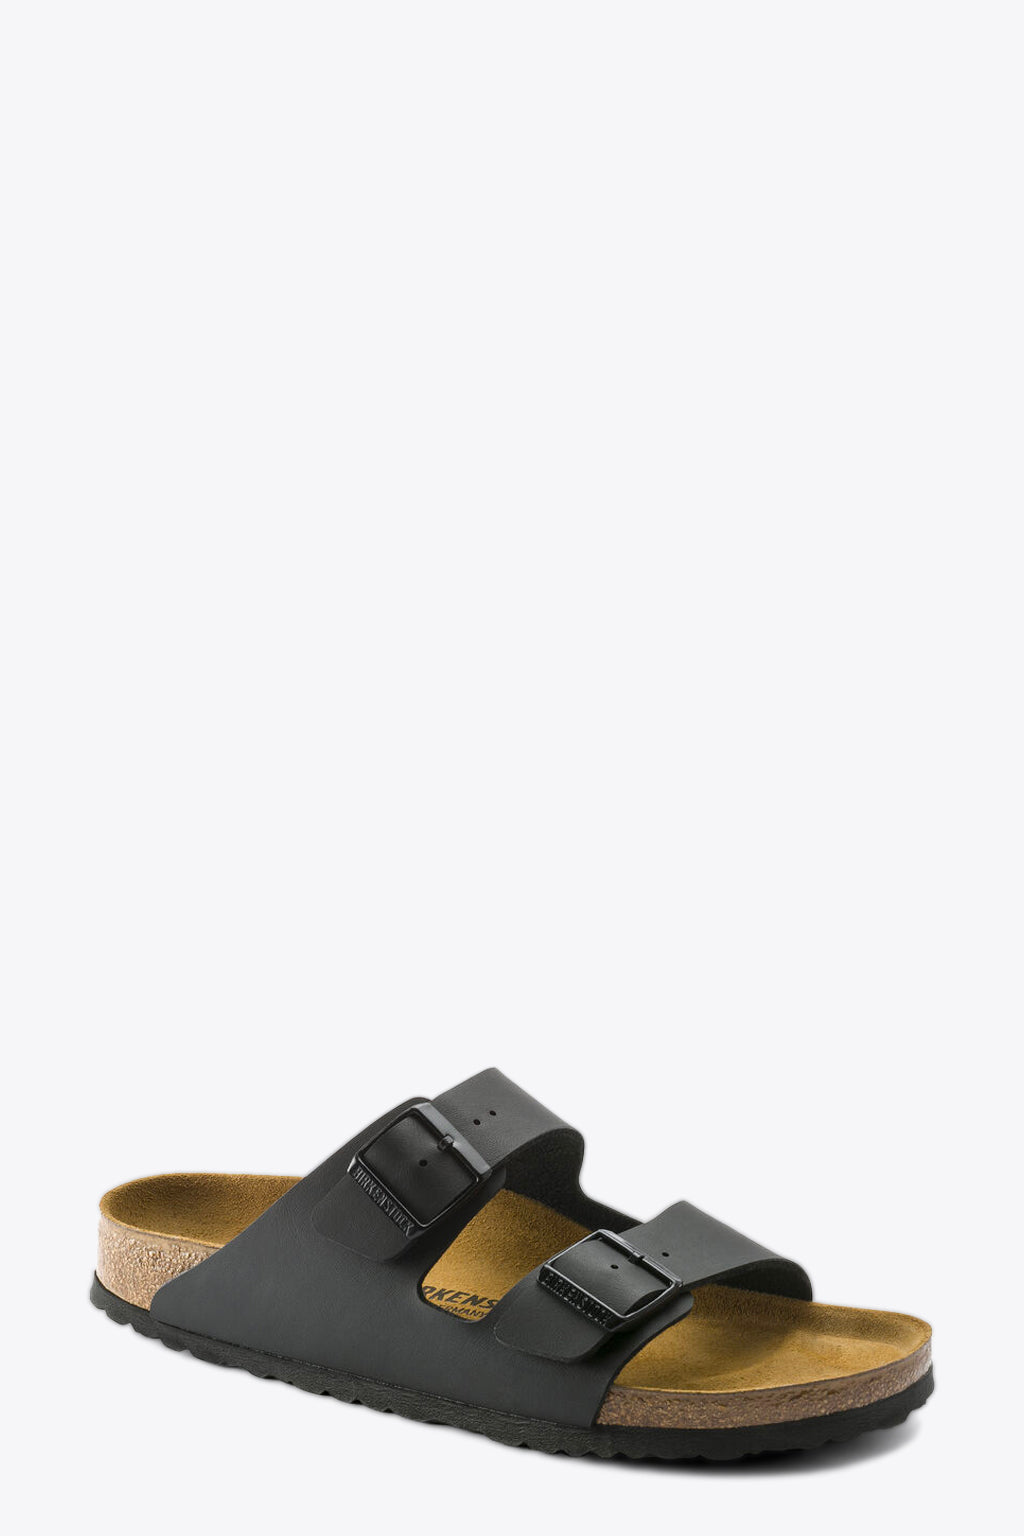 alt-image__Black-eco-leather-sandal-with-buckles---Arizona